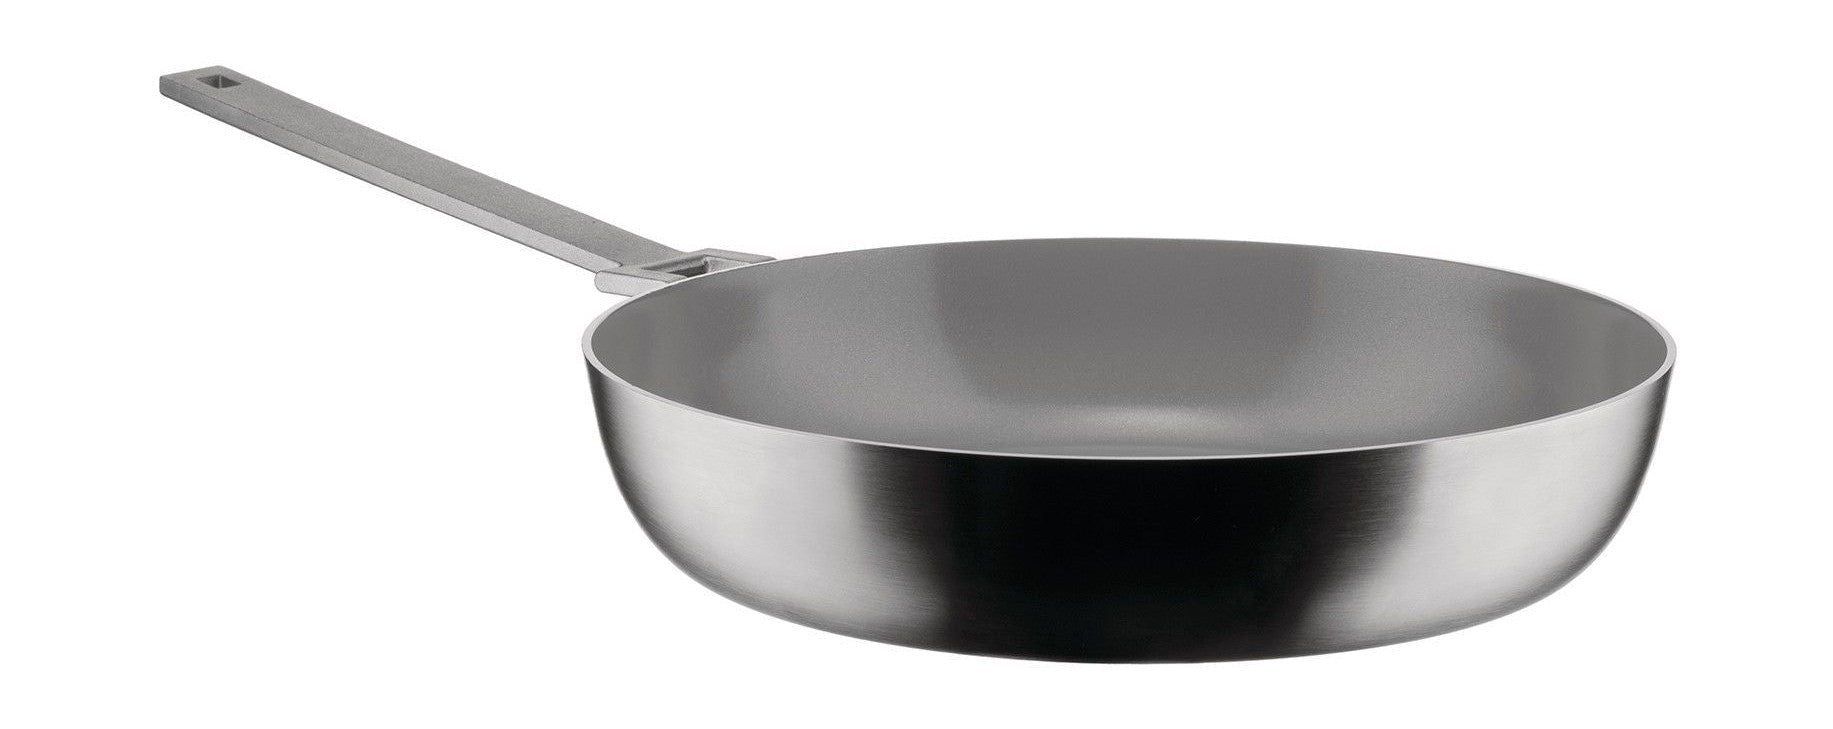 Alessi Convivio Deep Frying Pan With A Long Handle